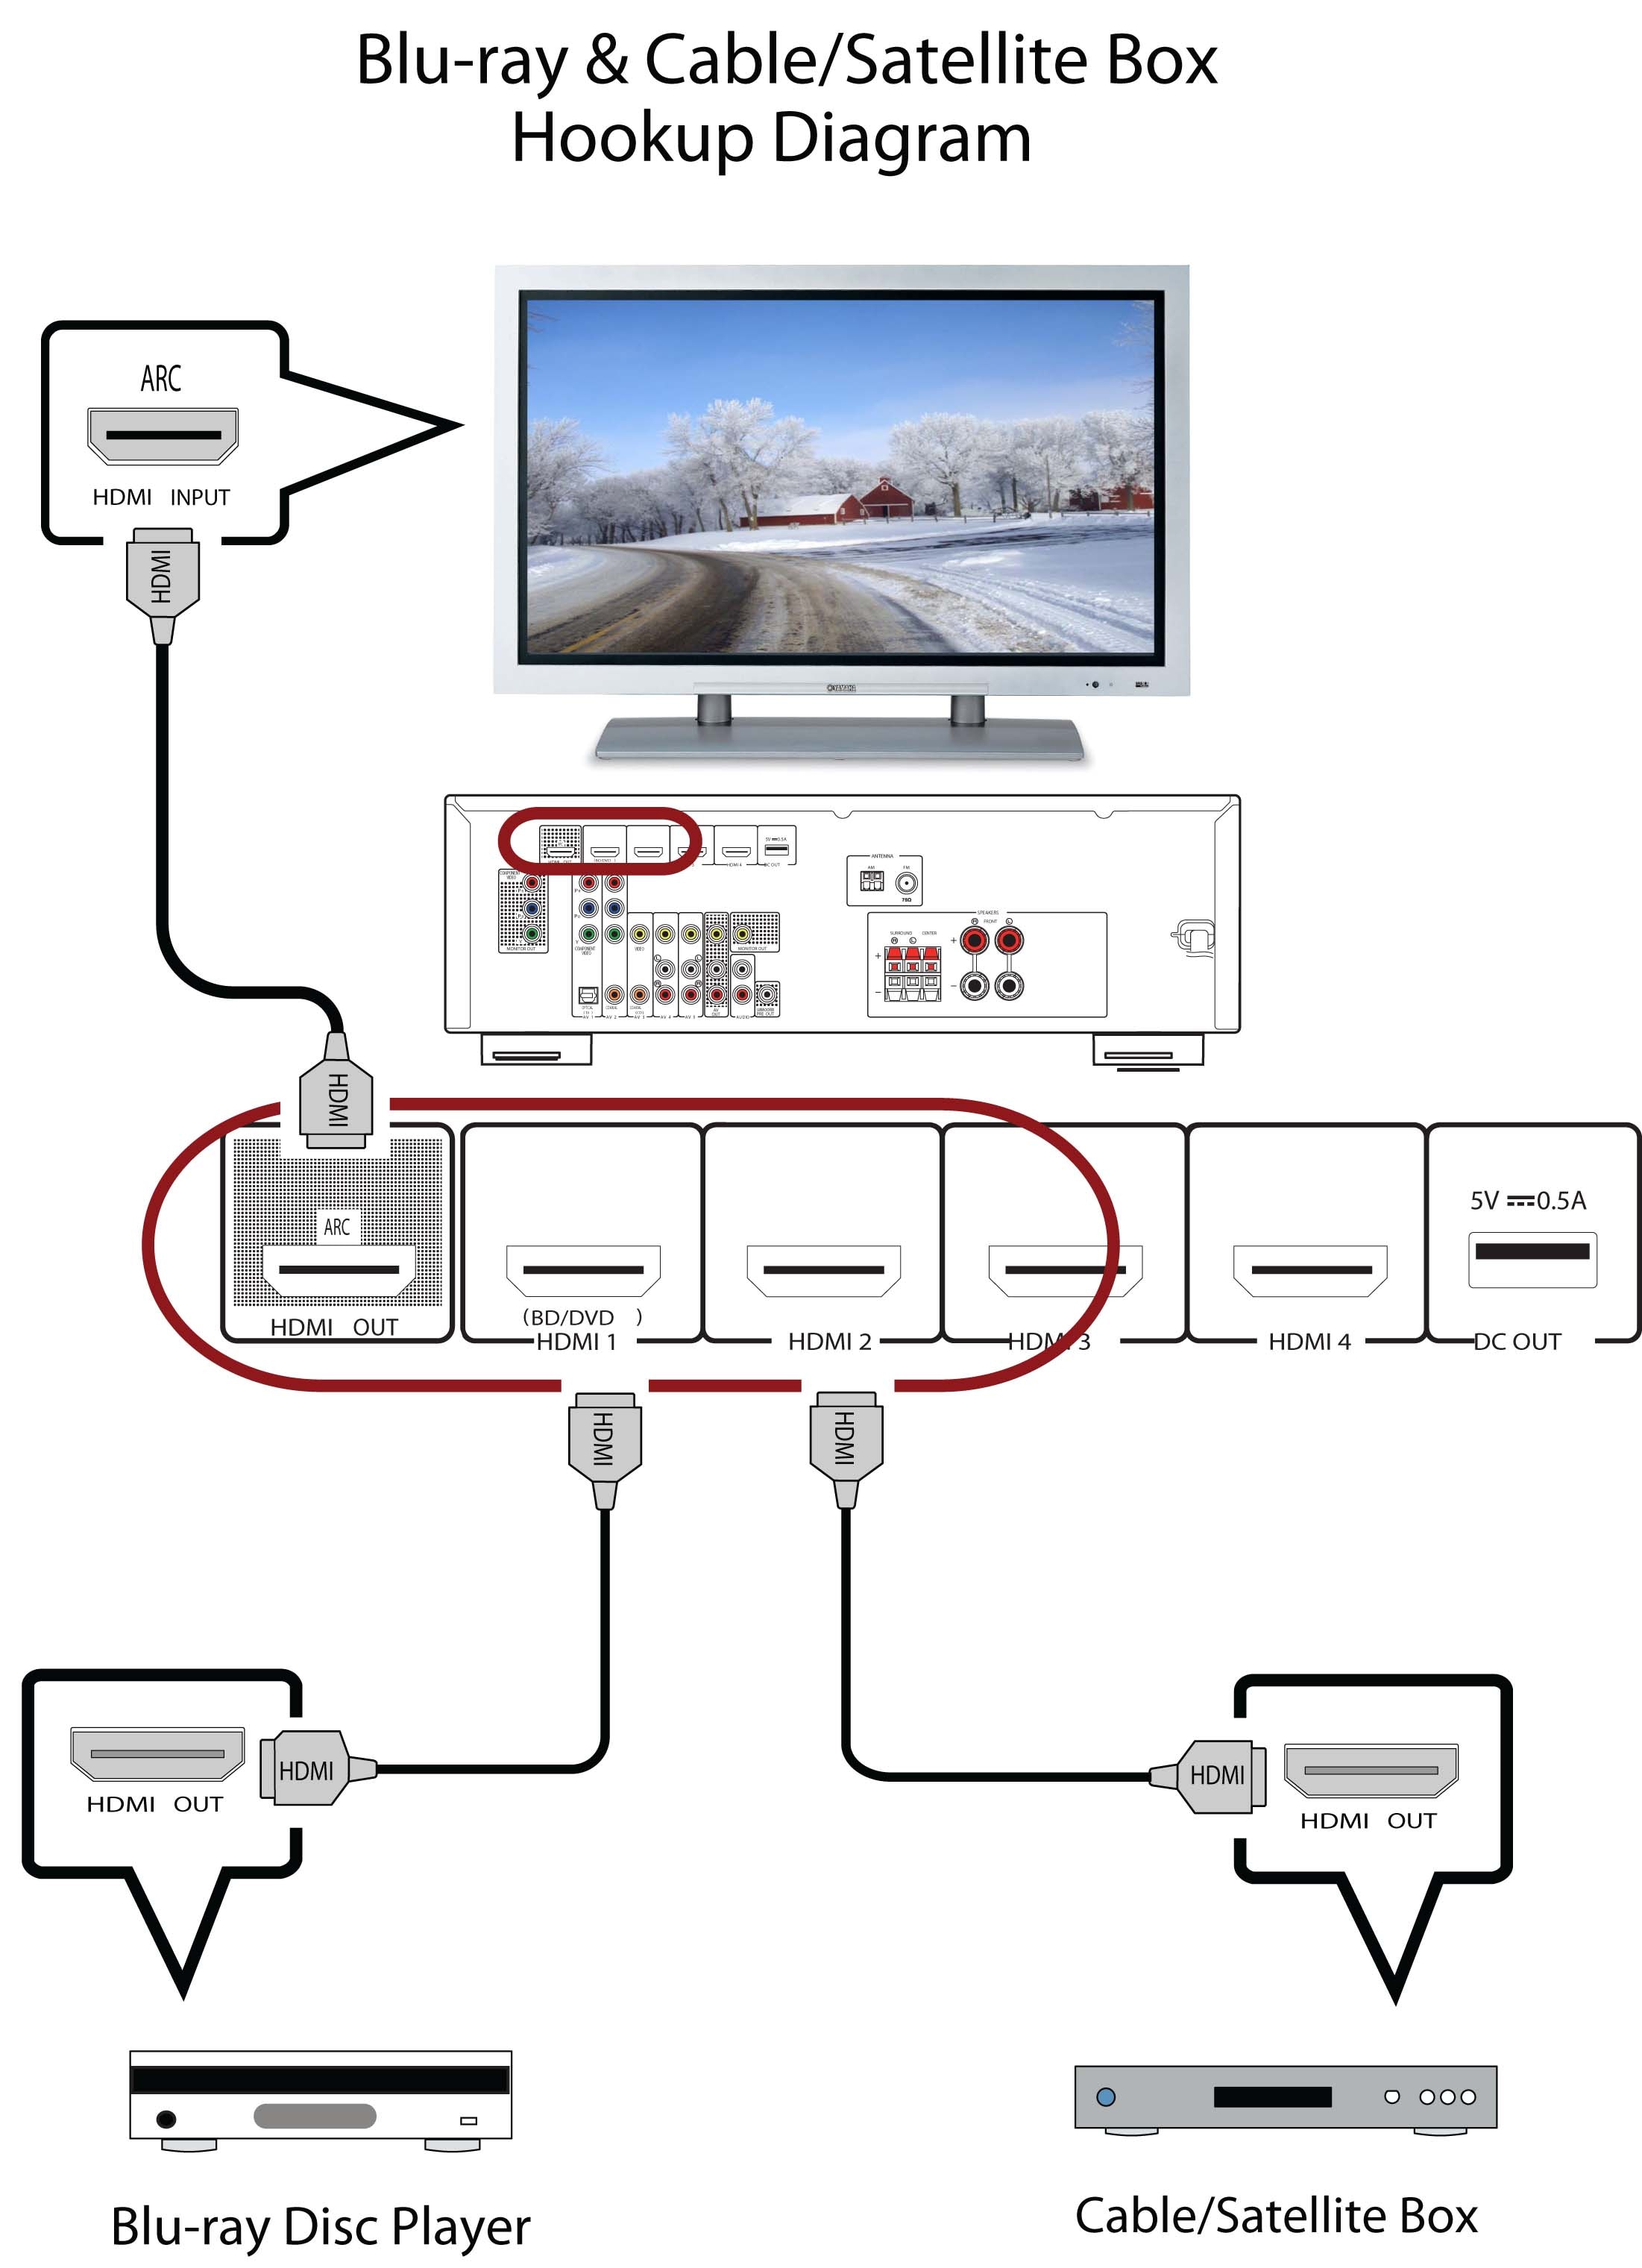 RX-V377 Cable/Satellite & Blu-ray HDMI hookup diagram - Yamaha - United